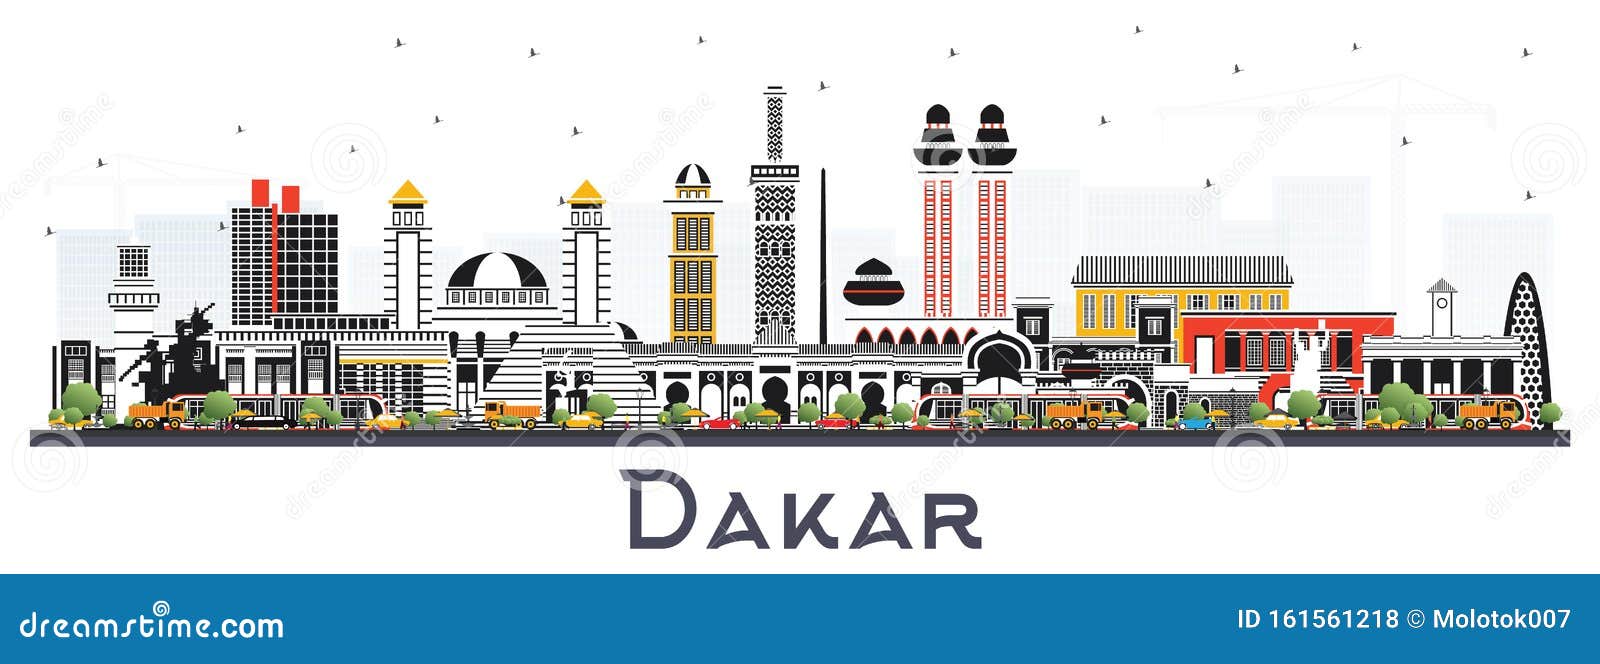 dakar senegal city skyline with color buildings  on white